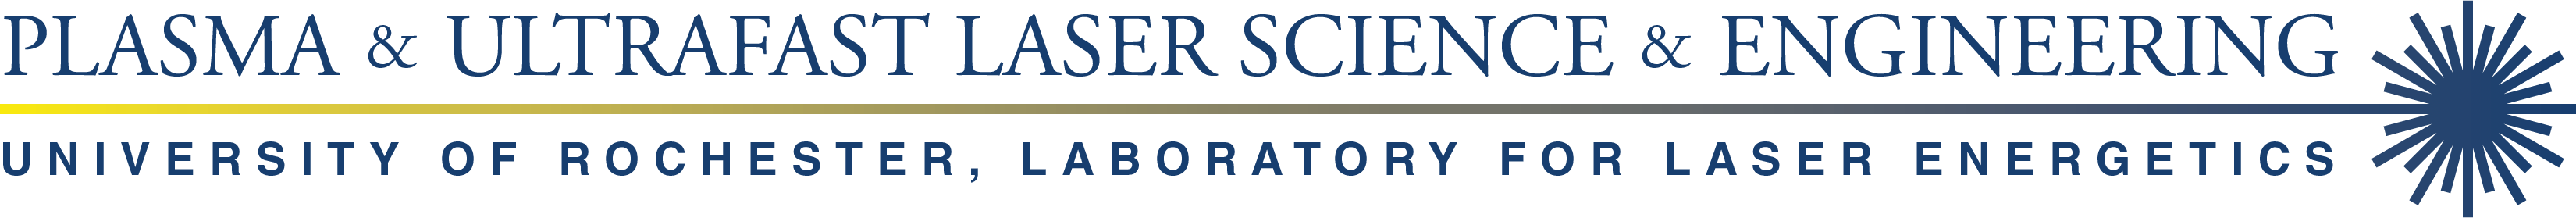 Plasma & Ultrafast Laser Science & Engineering; University of Rochester, Laboratory for Laser Energetics Logo